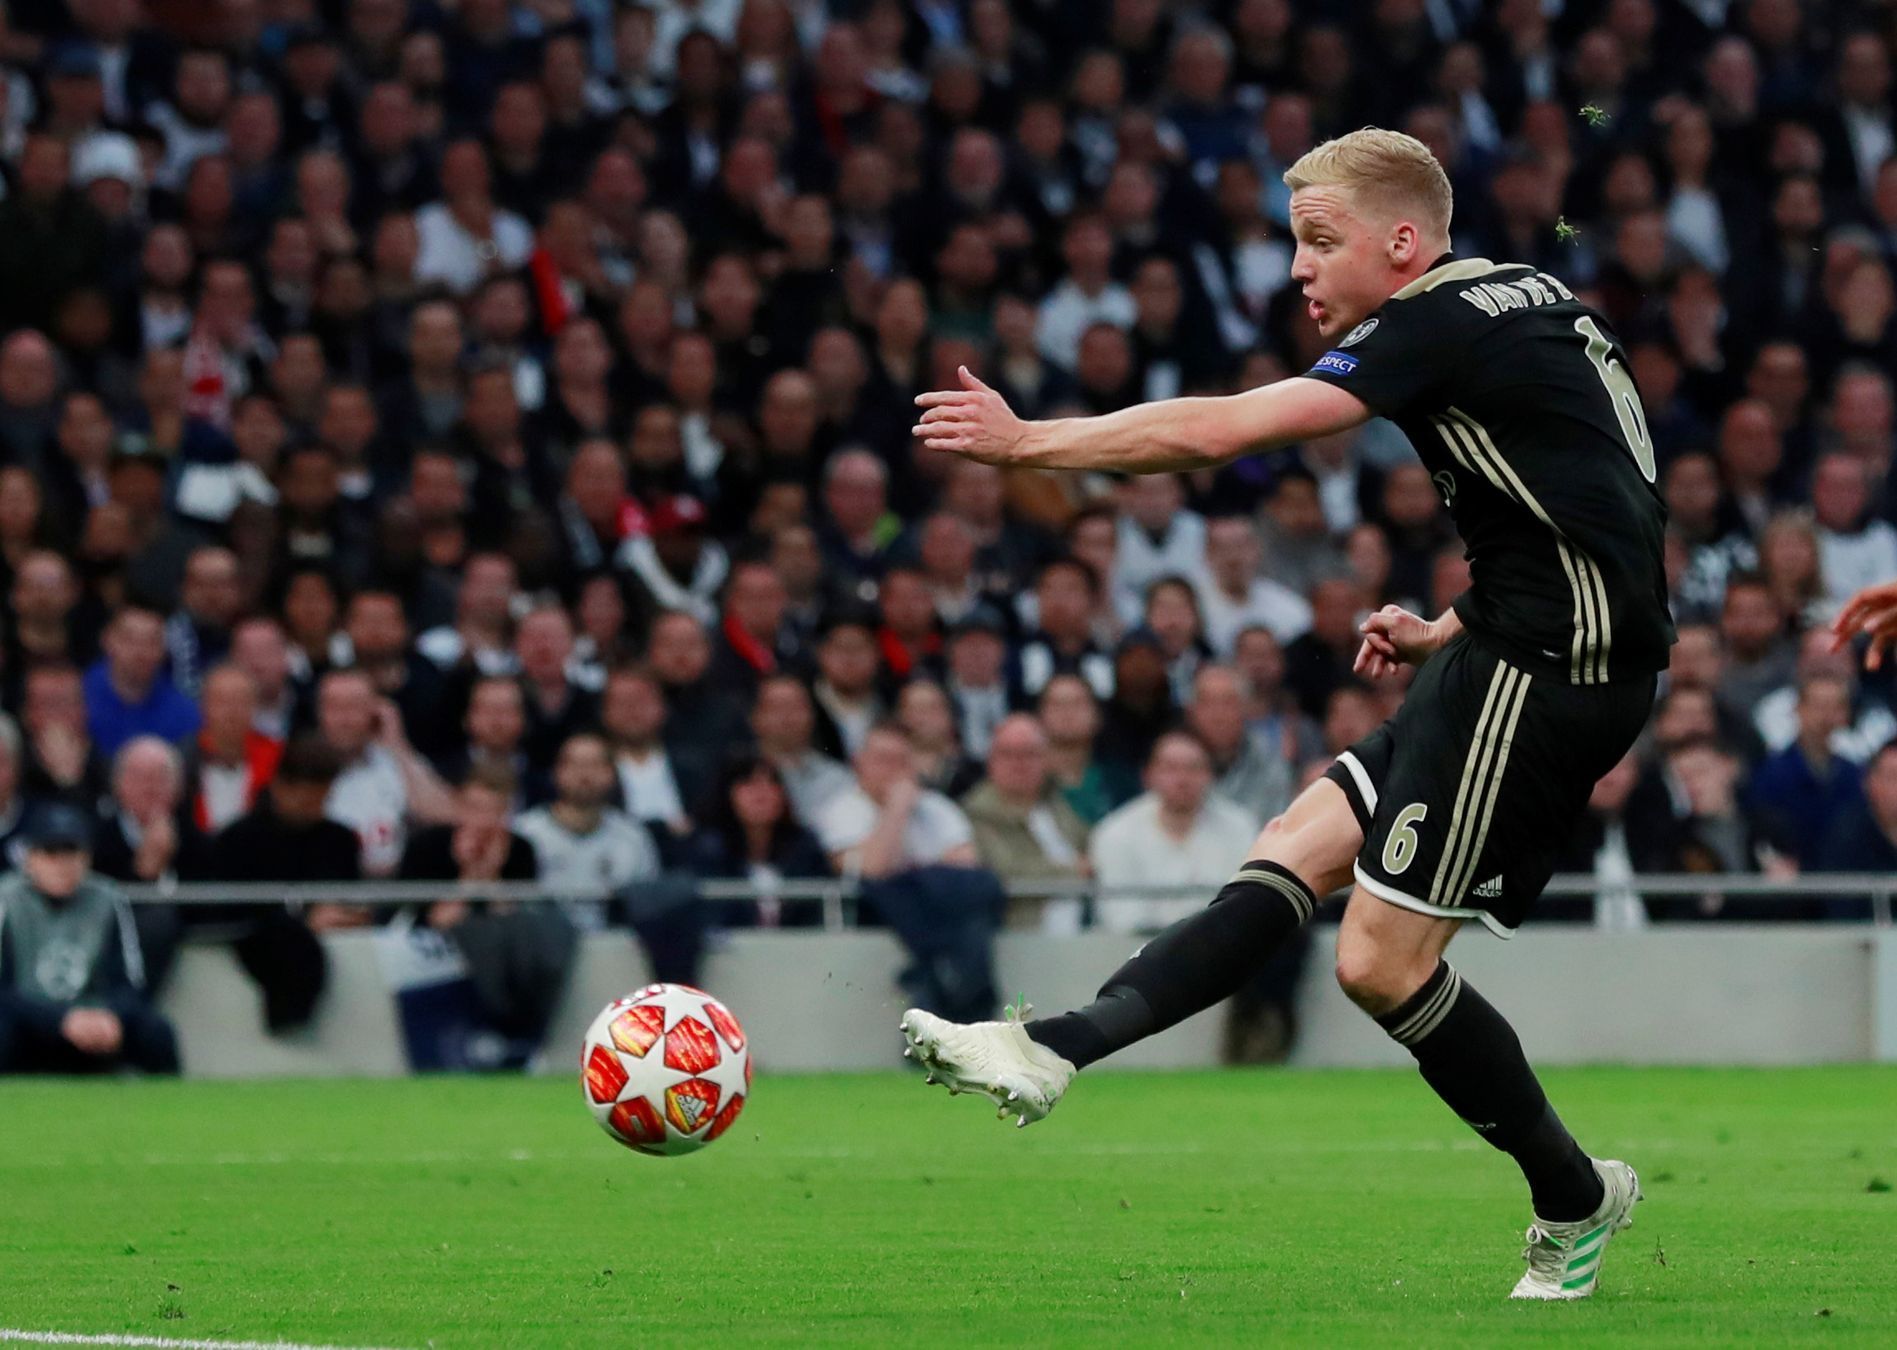 Donny van de Beek dává gól na 0:1 v prvním semifinále LM Tottenham - Ajax